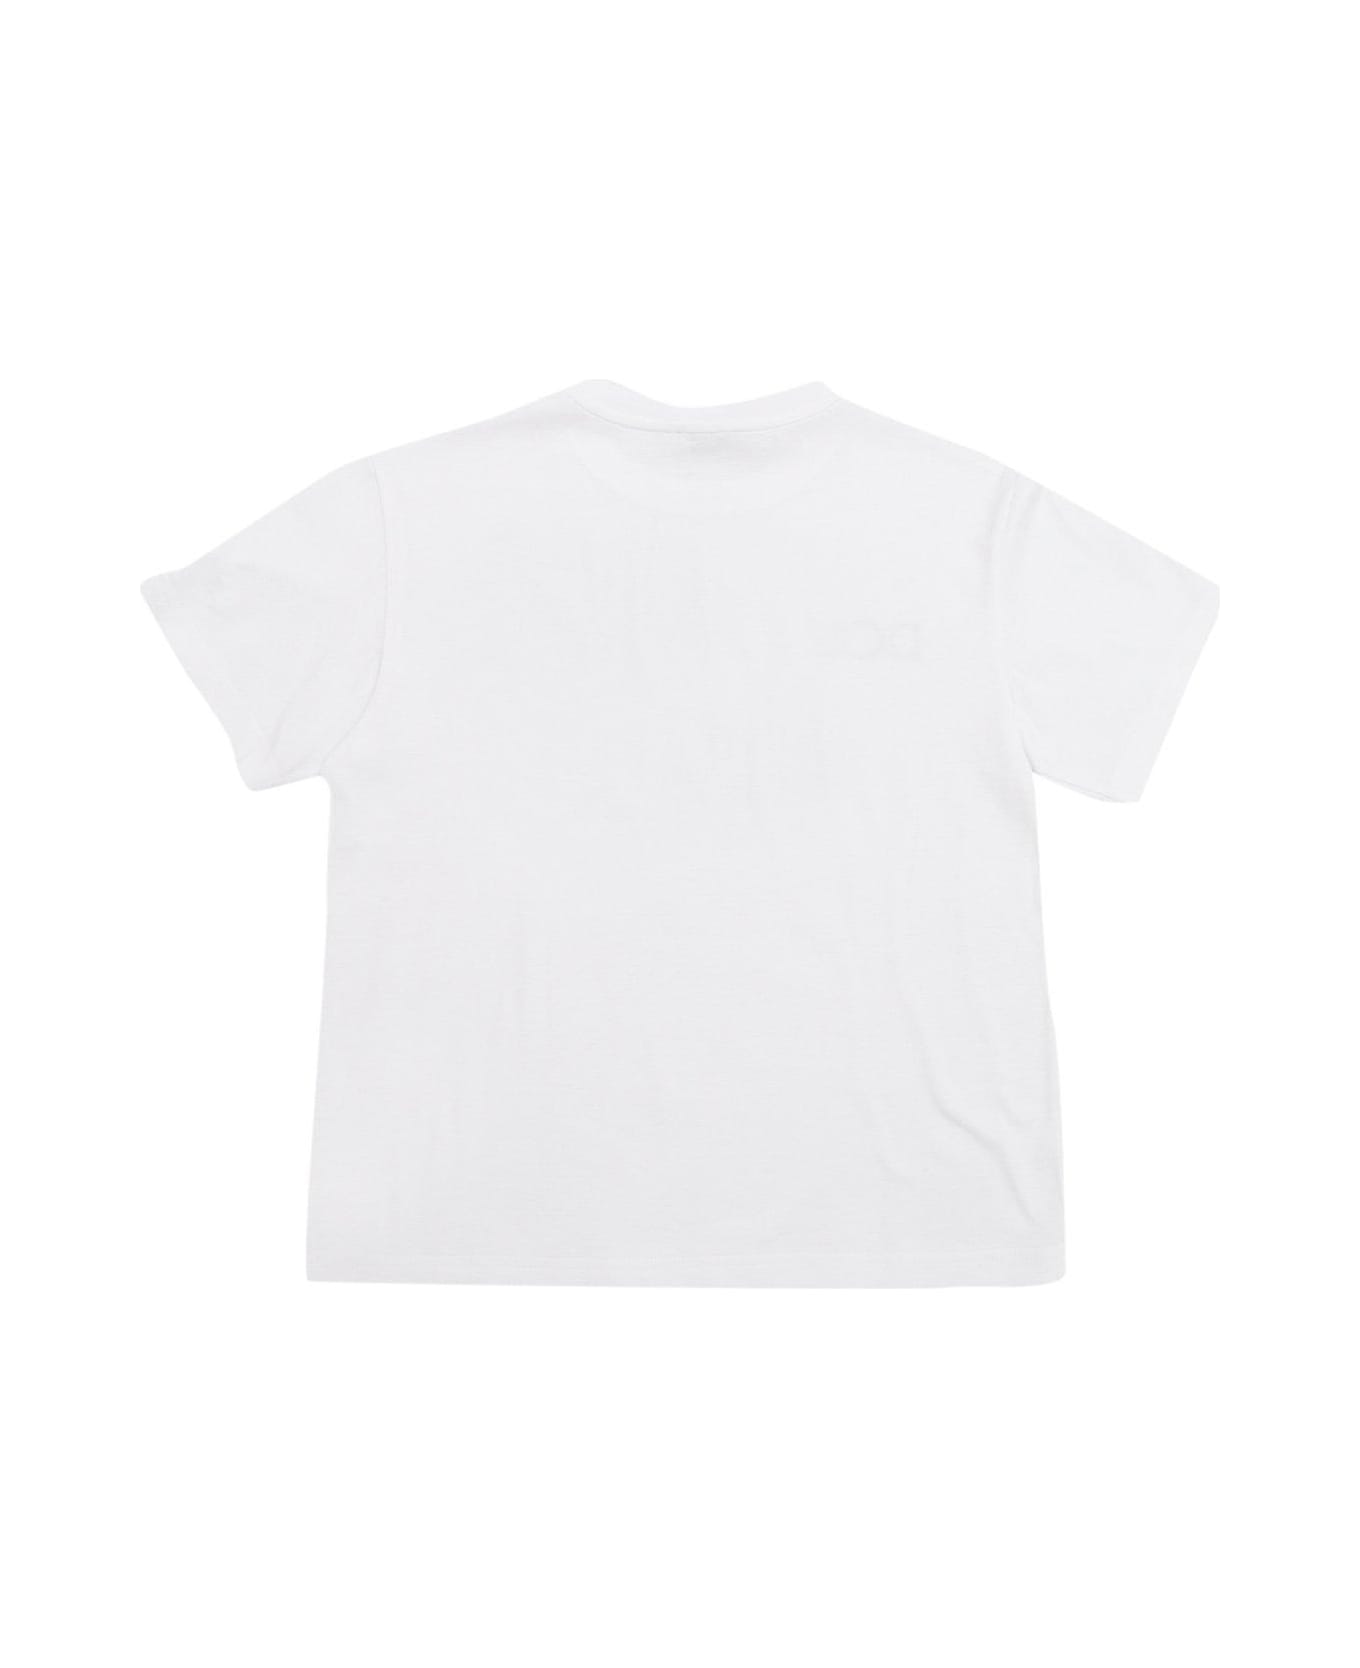 Dolce & Gabbana Logo Printed Crewneck T-shirt - Bianco Ottico Tシャツ＆ポロシャツ